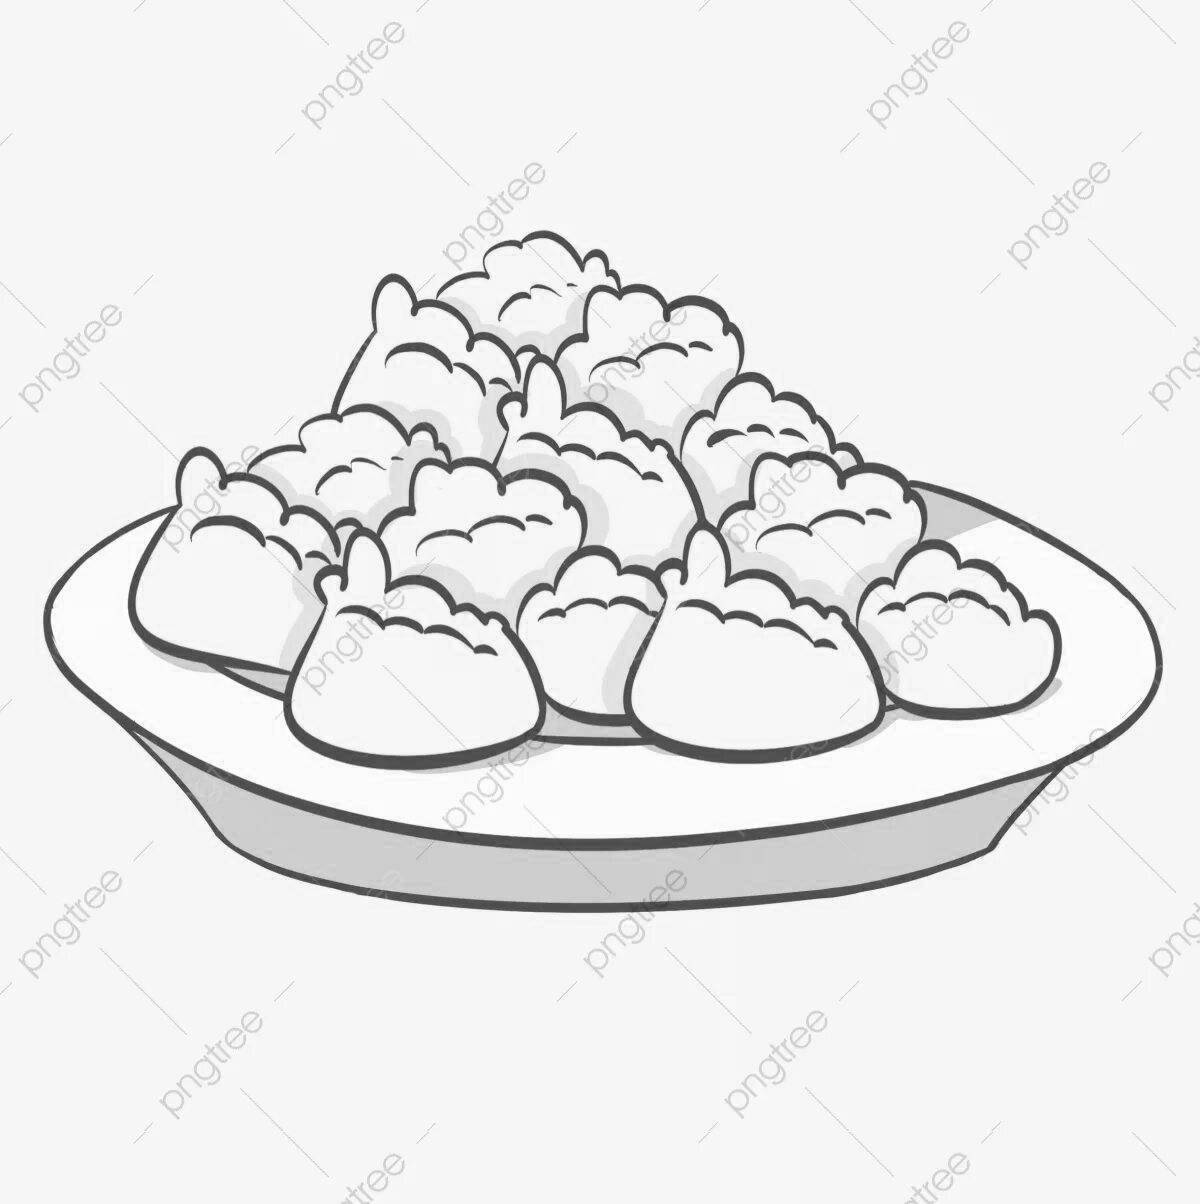 Concise dumplings in a bowl